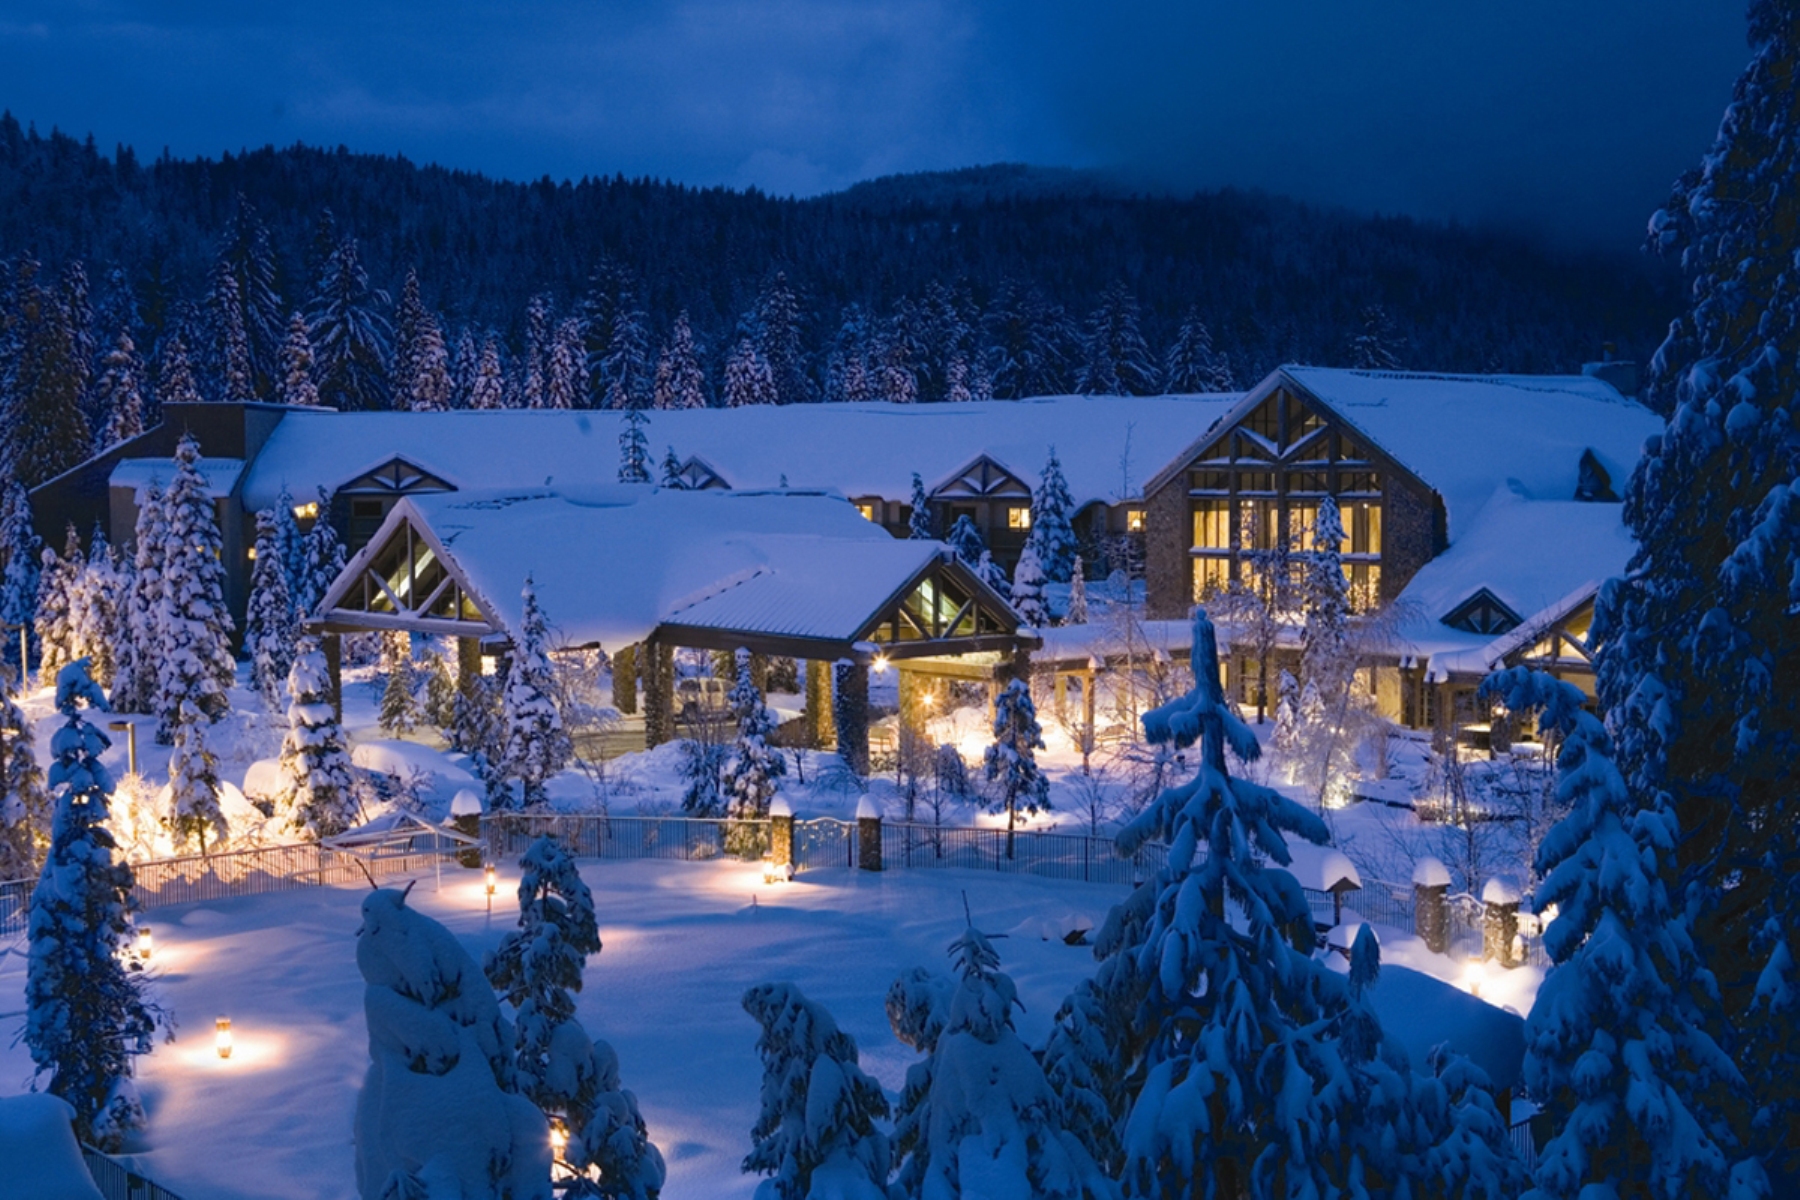 Snowy weather and beautiful scenery meets glitz and glamour this holiday season at Tenaya Lodge